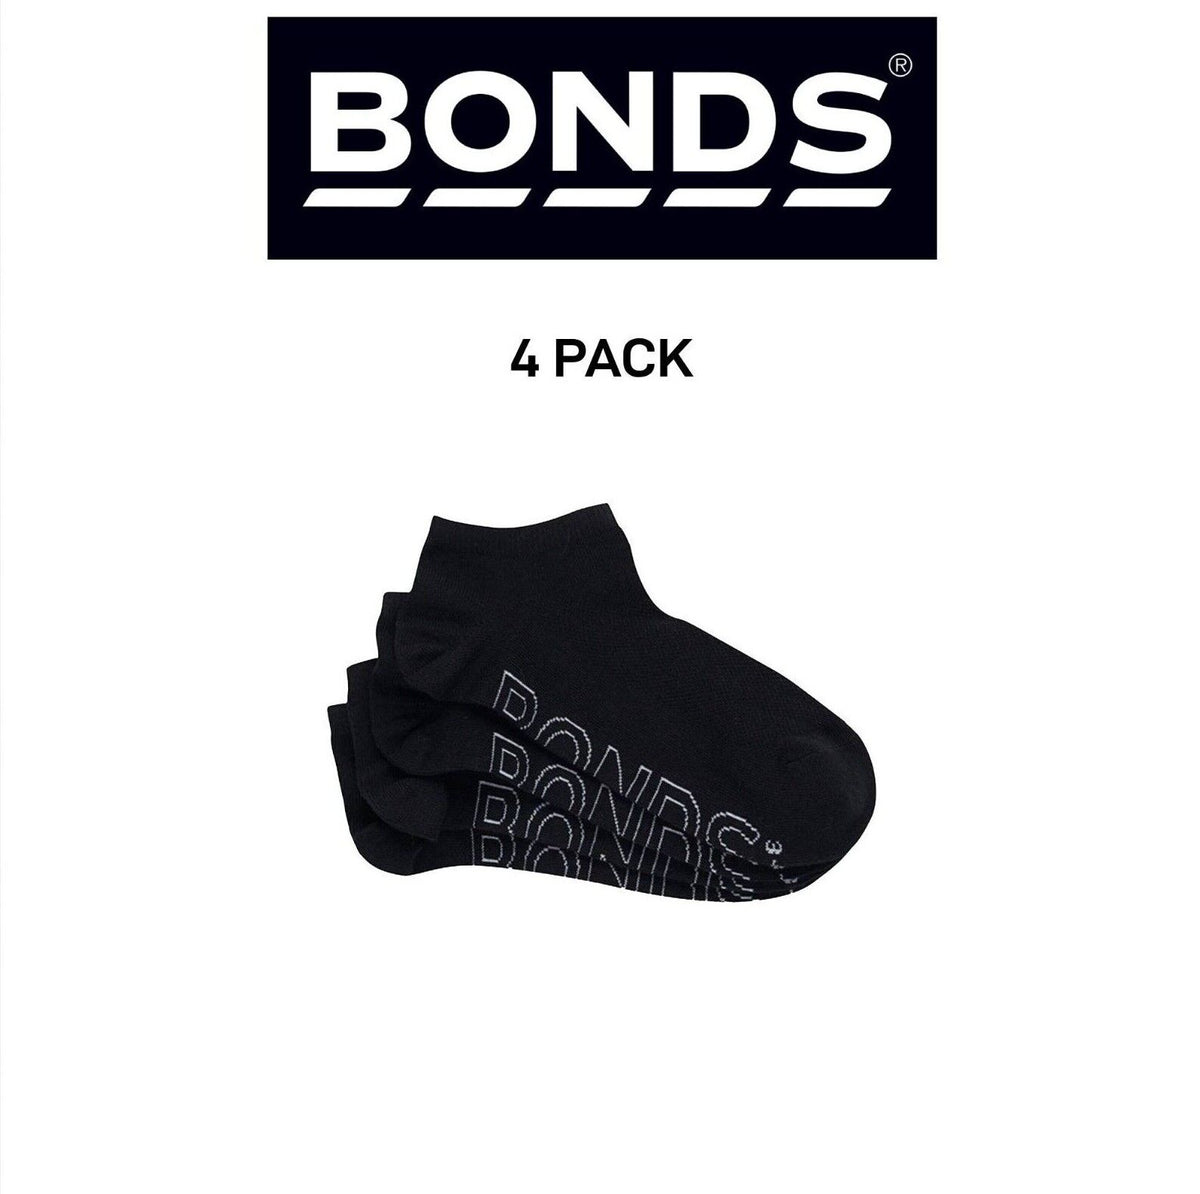 Bonds Womens Lightweight Low Cut Smooth Comfy Stay-Put Fit Socks 4 Pack LXPV4N